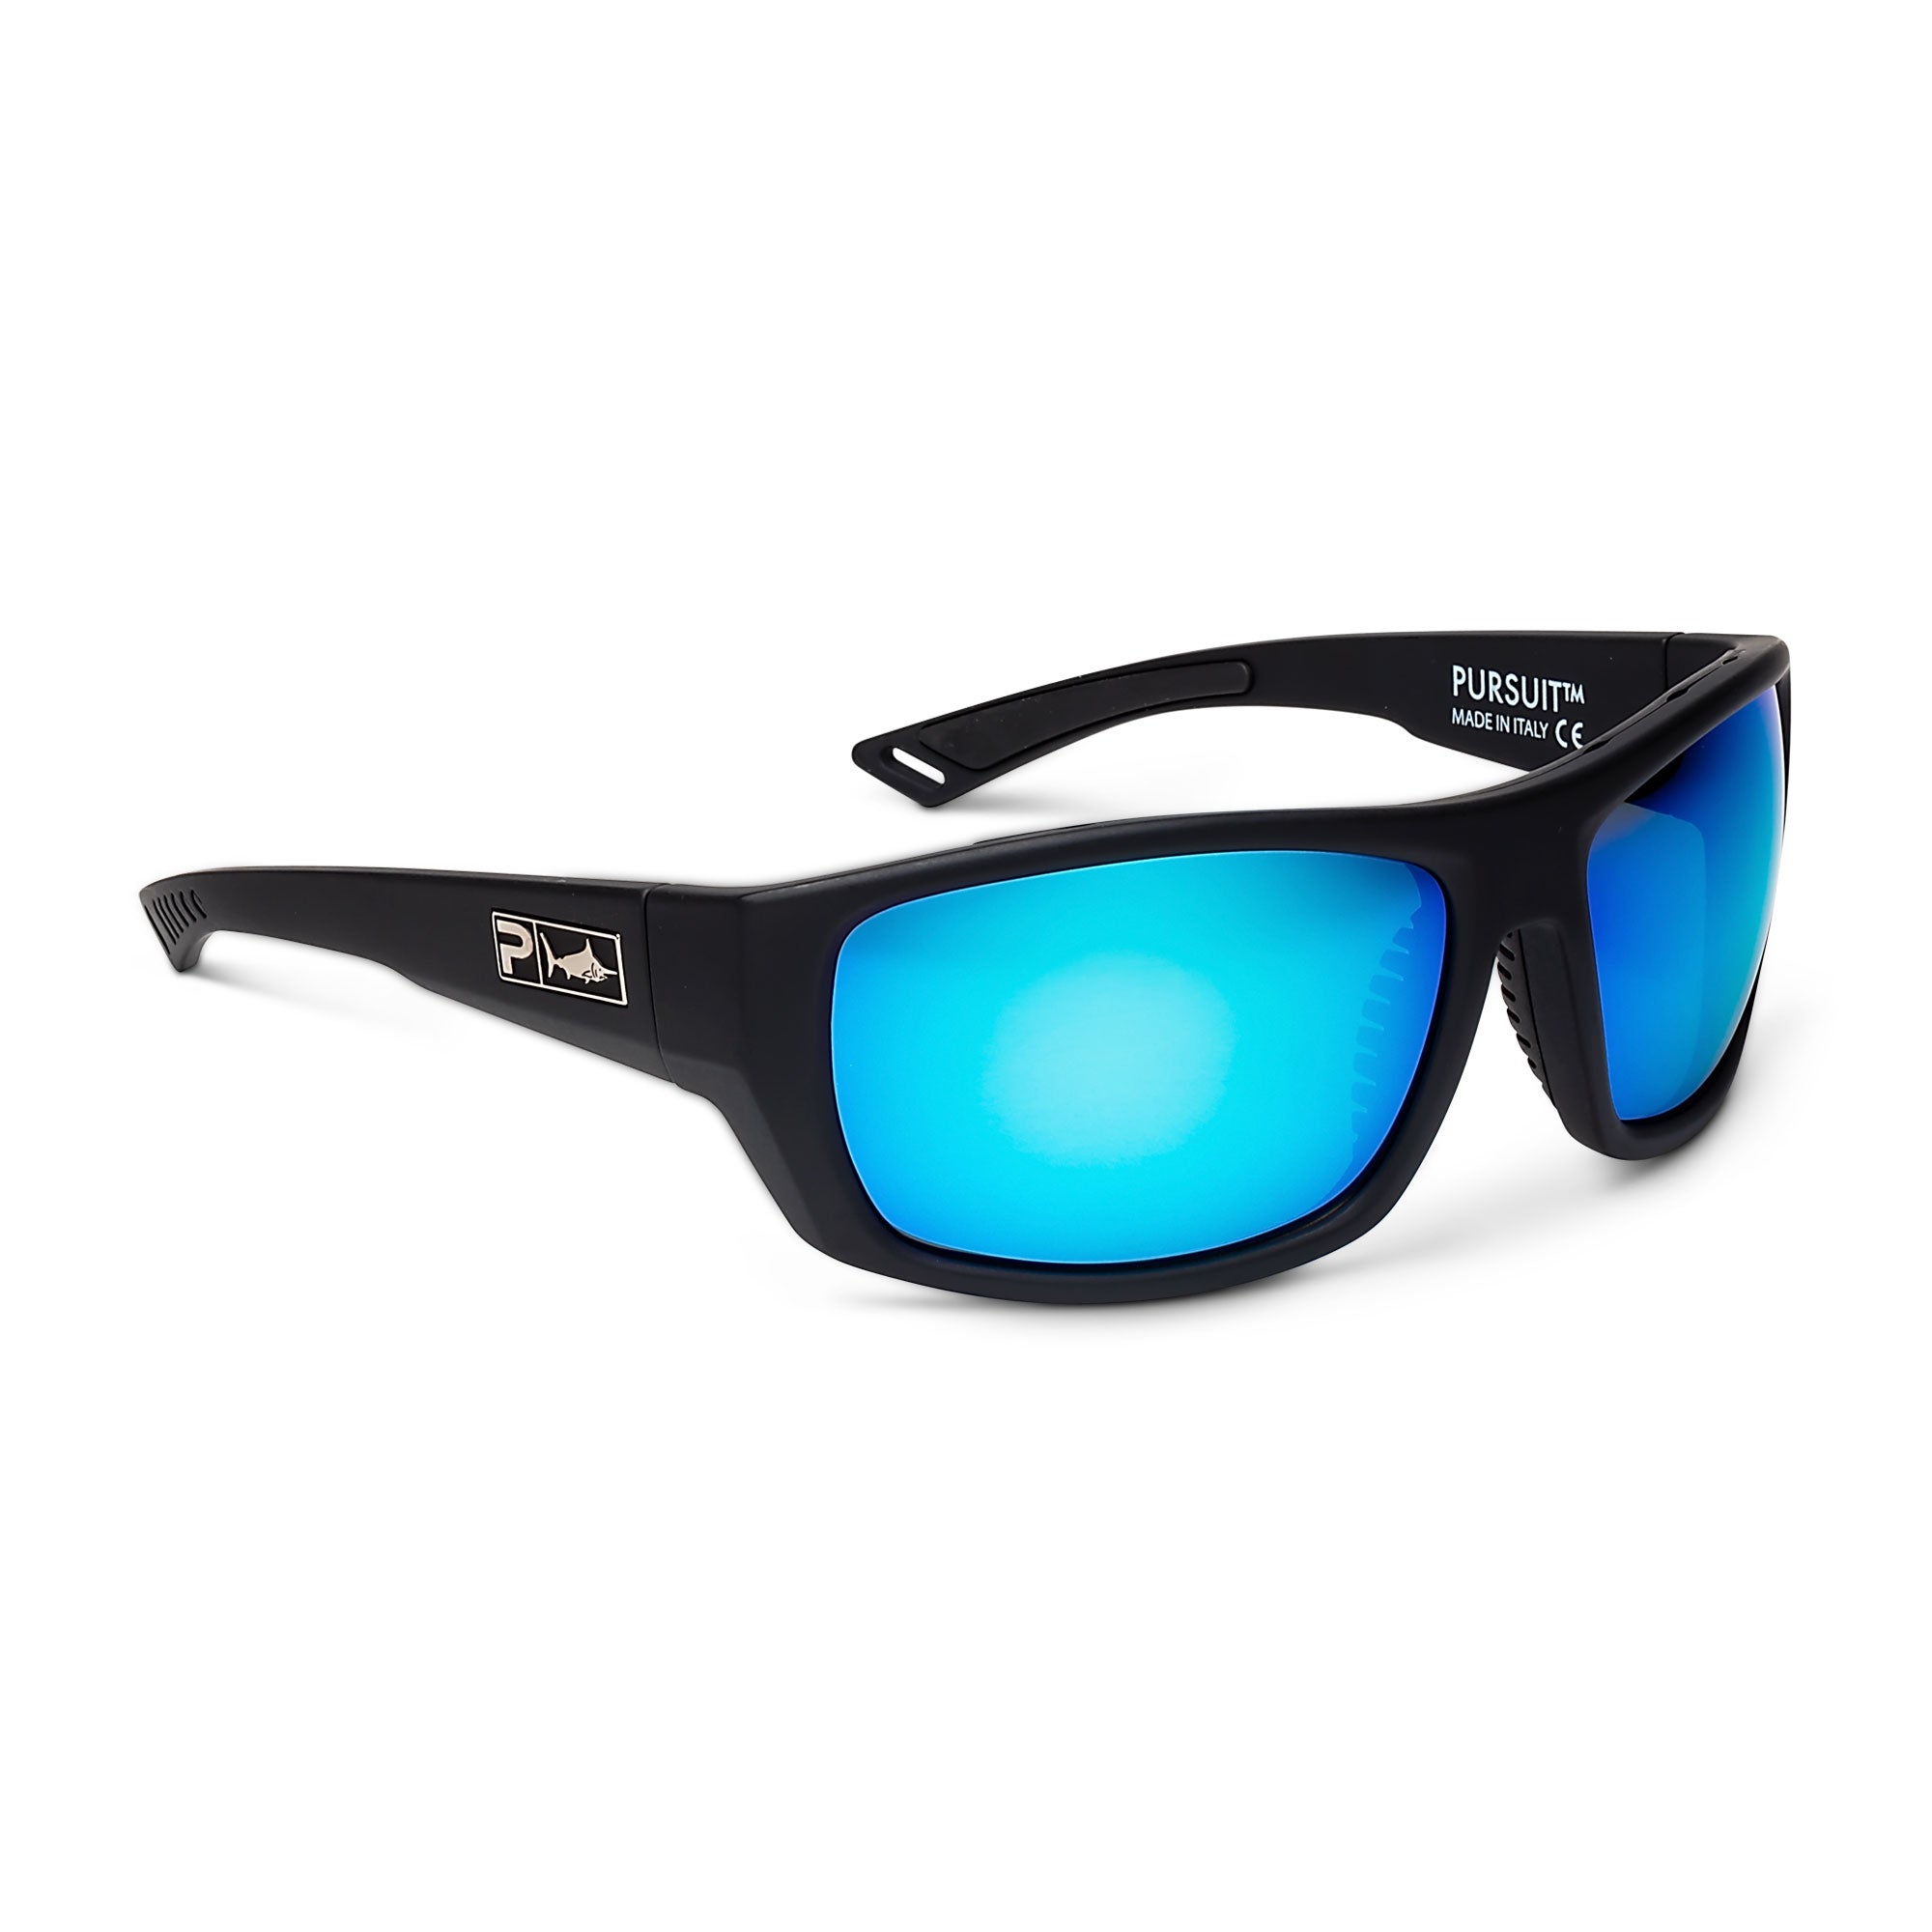 Pursuit - Polarized Poly Lens Fishing Sunglasses